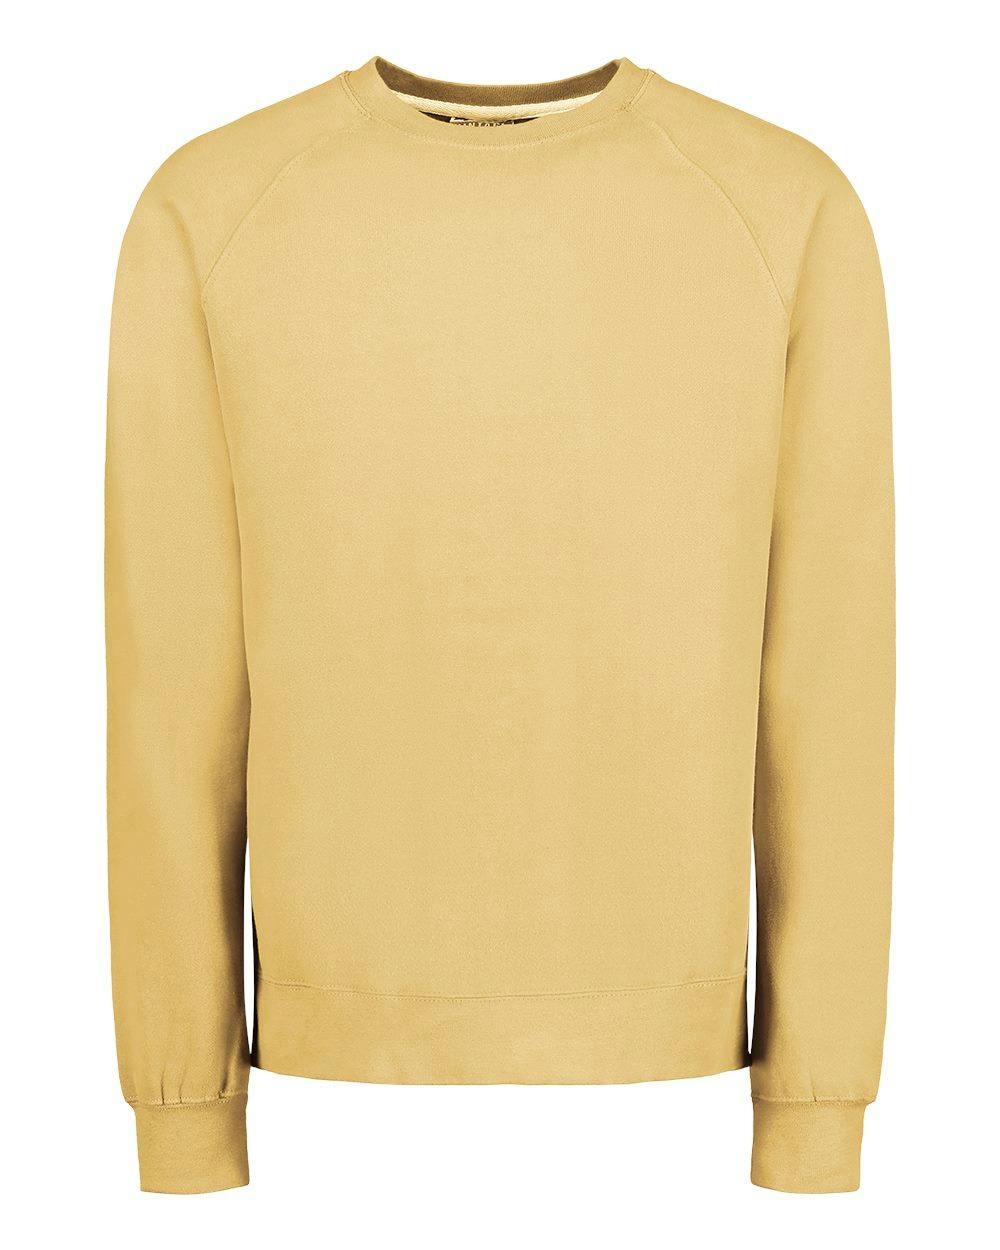 Image for Vintage Fleece Raglan Crewneck Sweatshirt - 17116